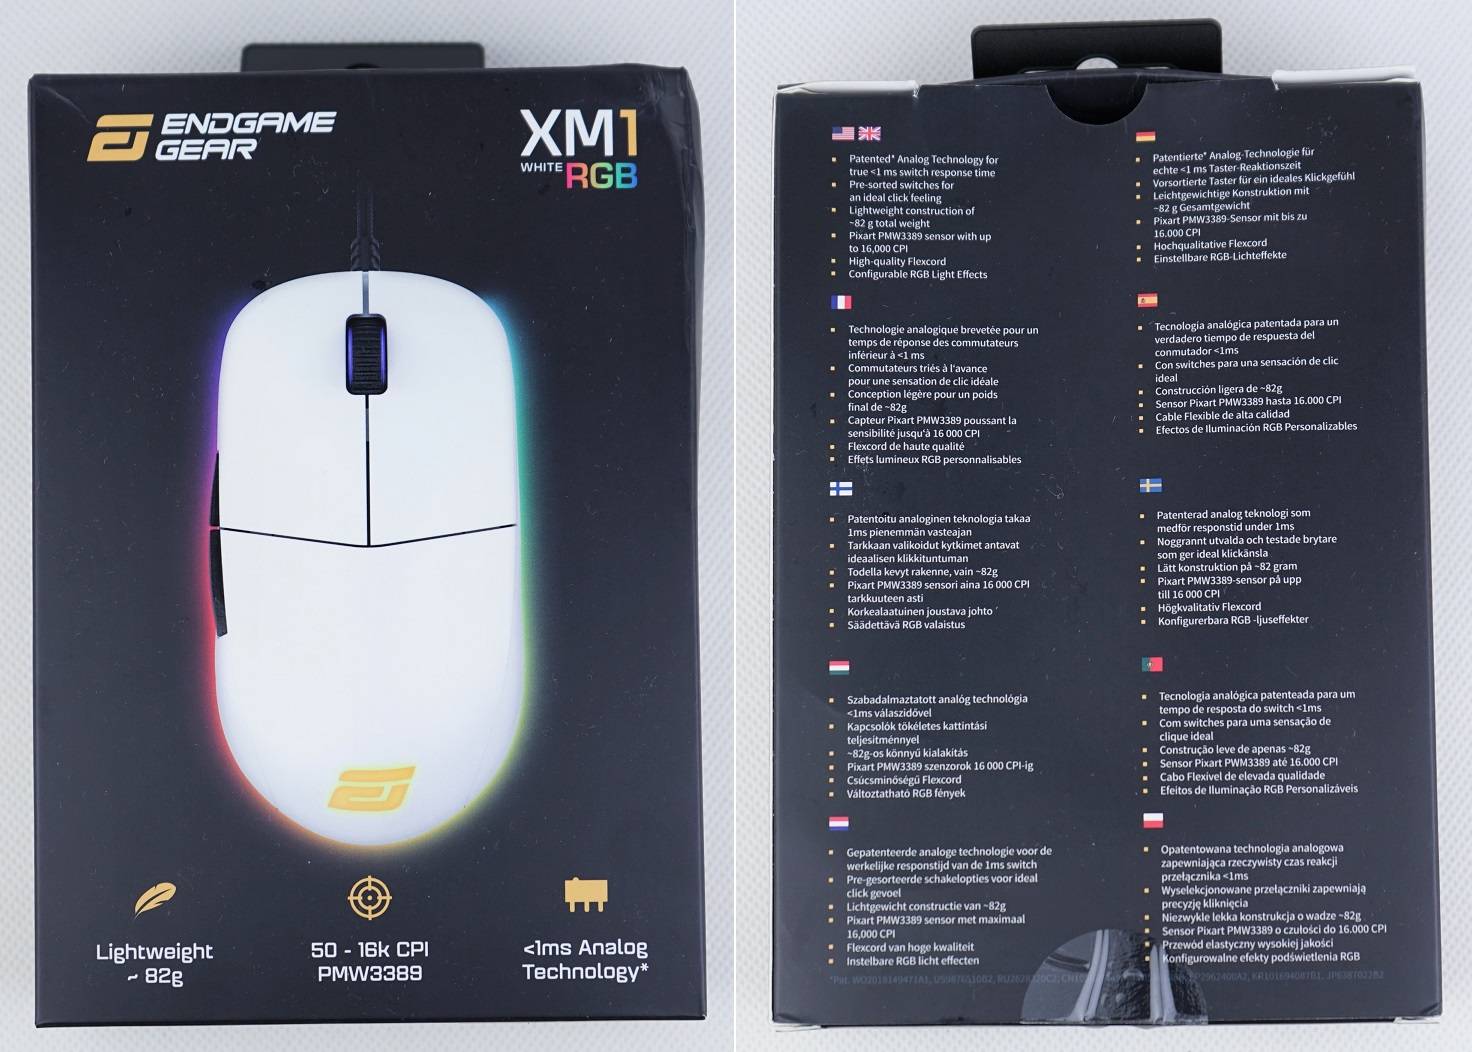 Endgame Gear XM1 RGB Gaming Mouse